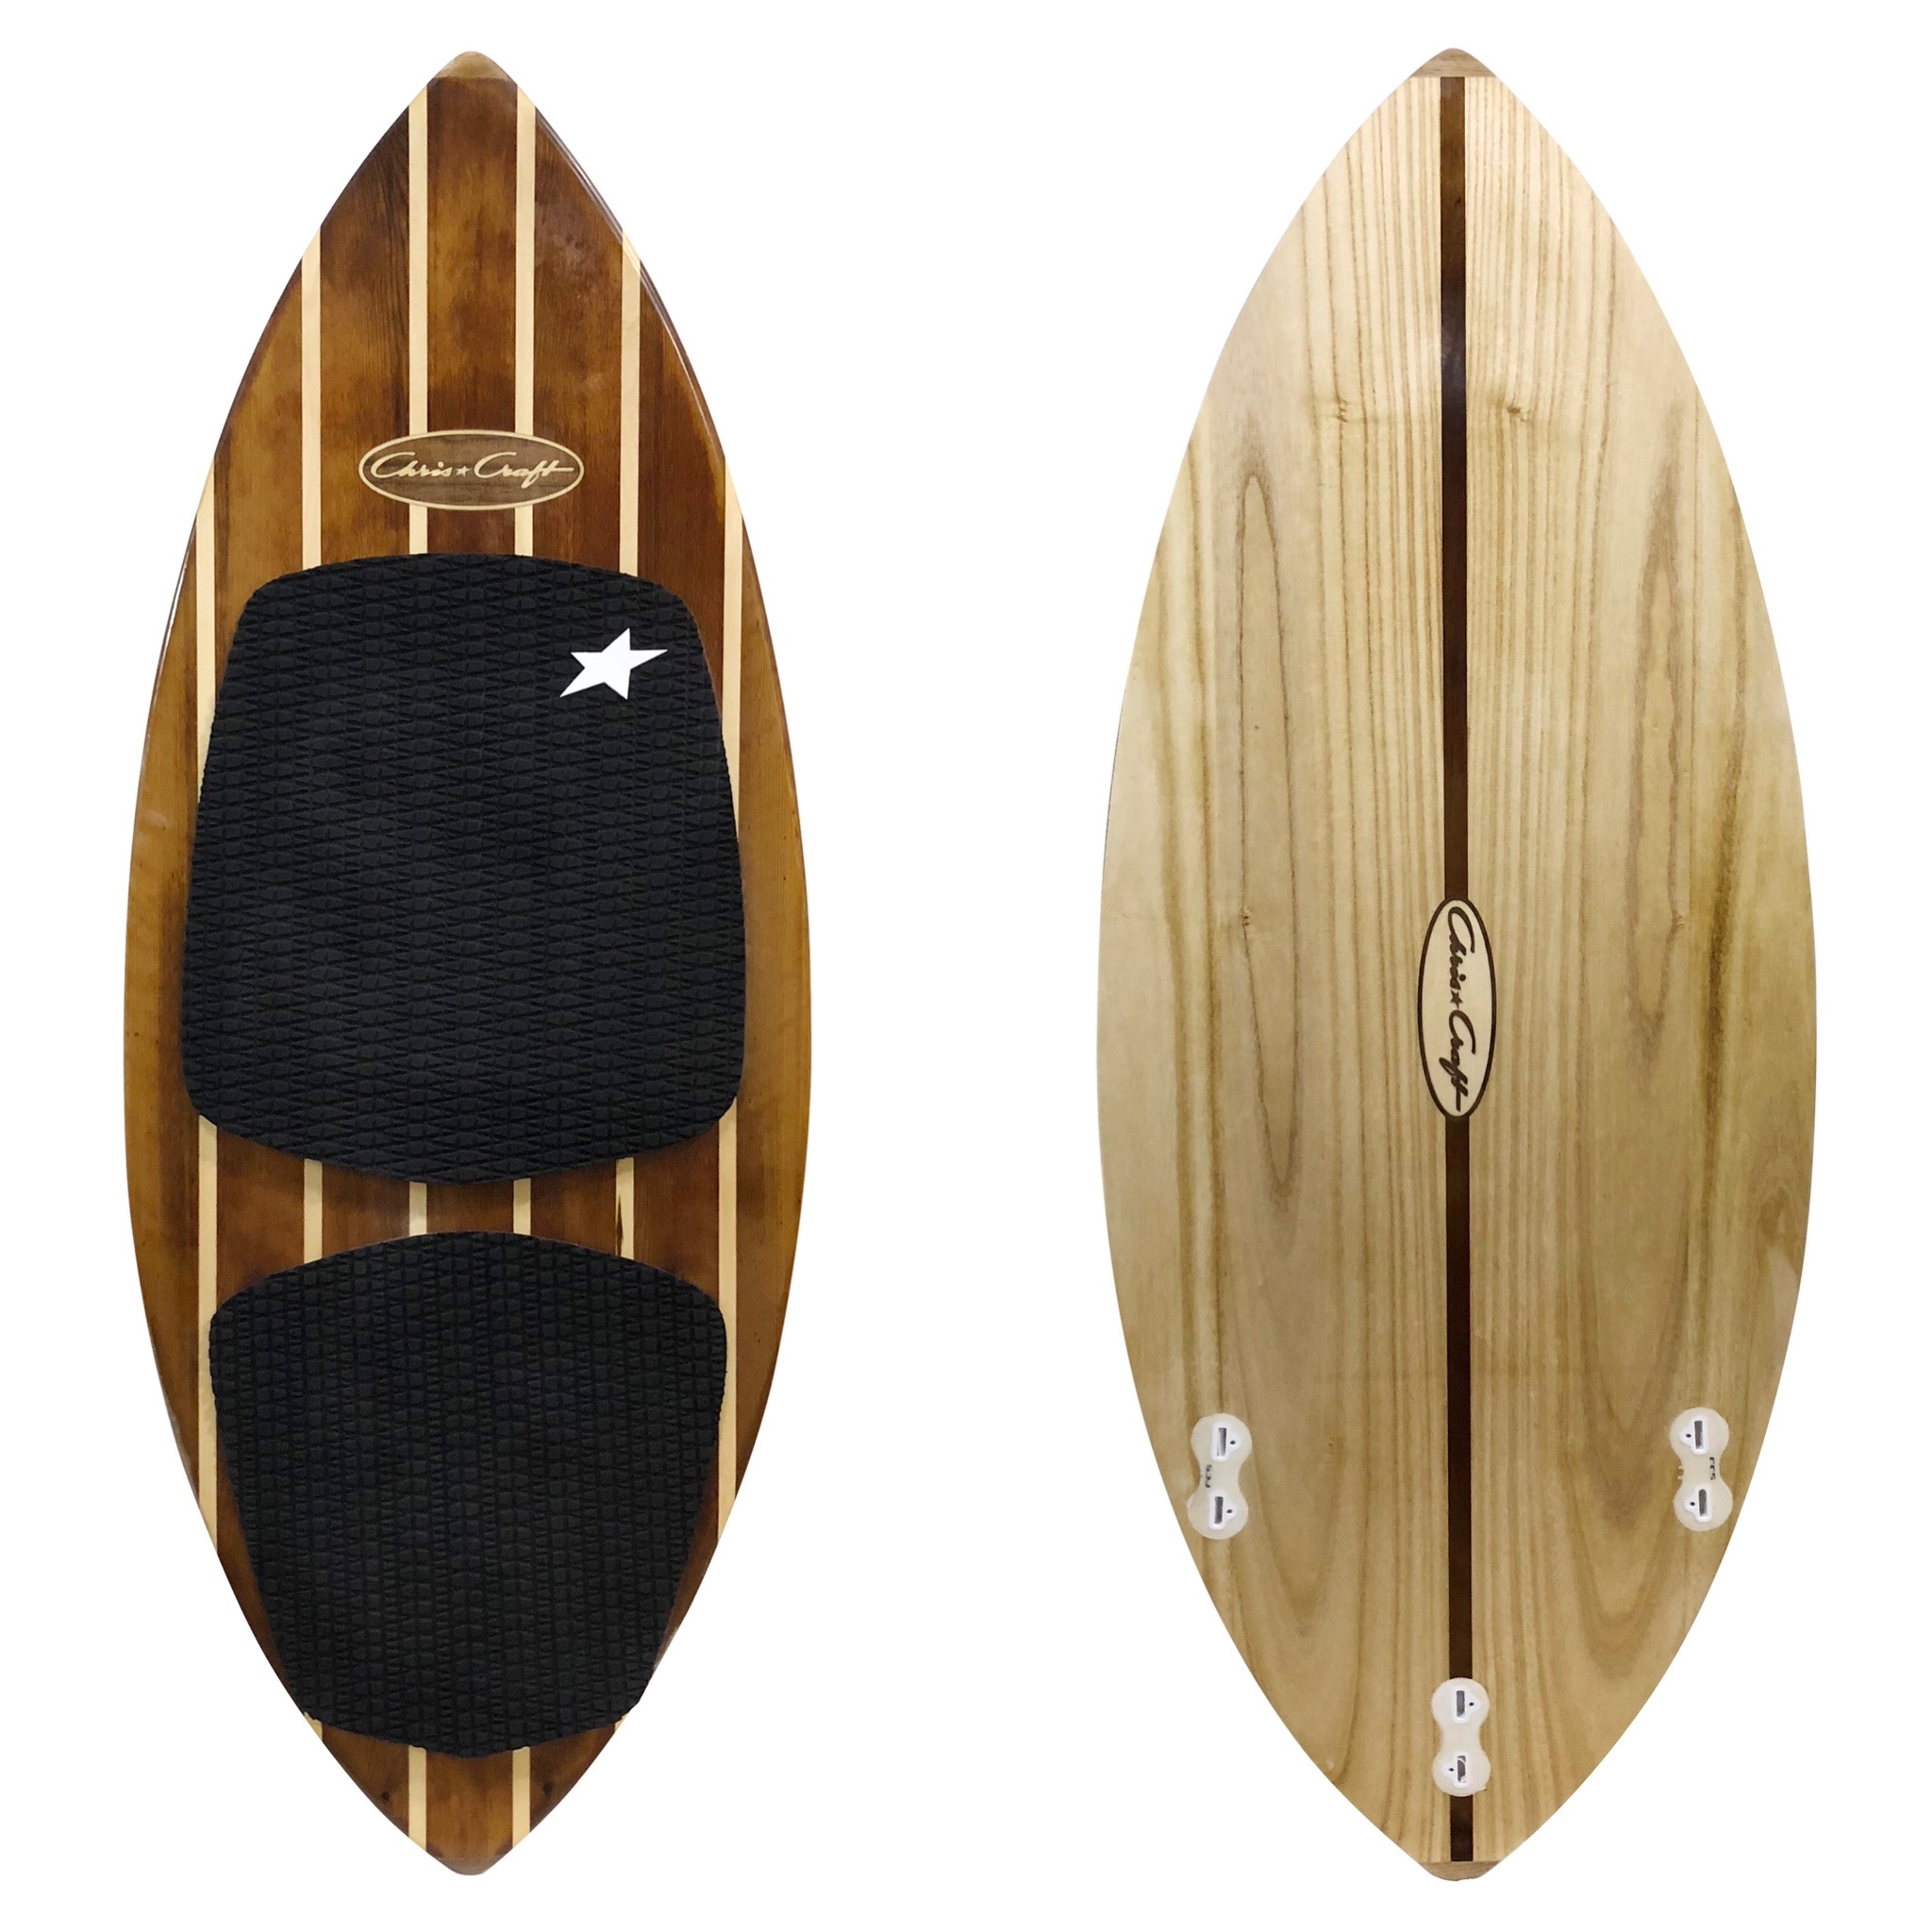 Wood Wakesurf Board with Chris Craft logo made in usa